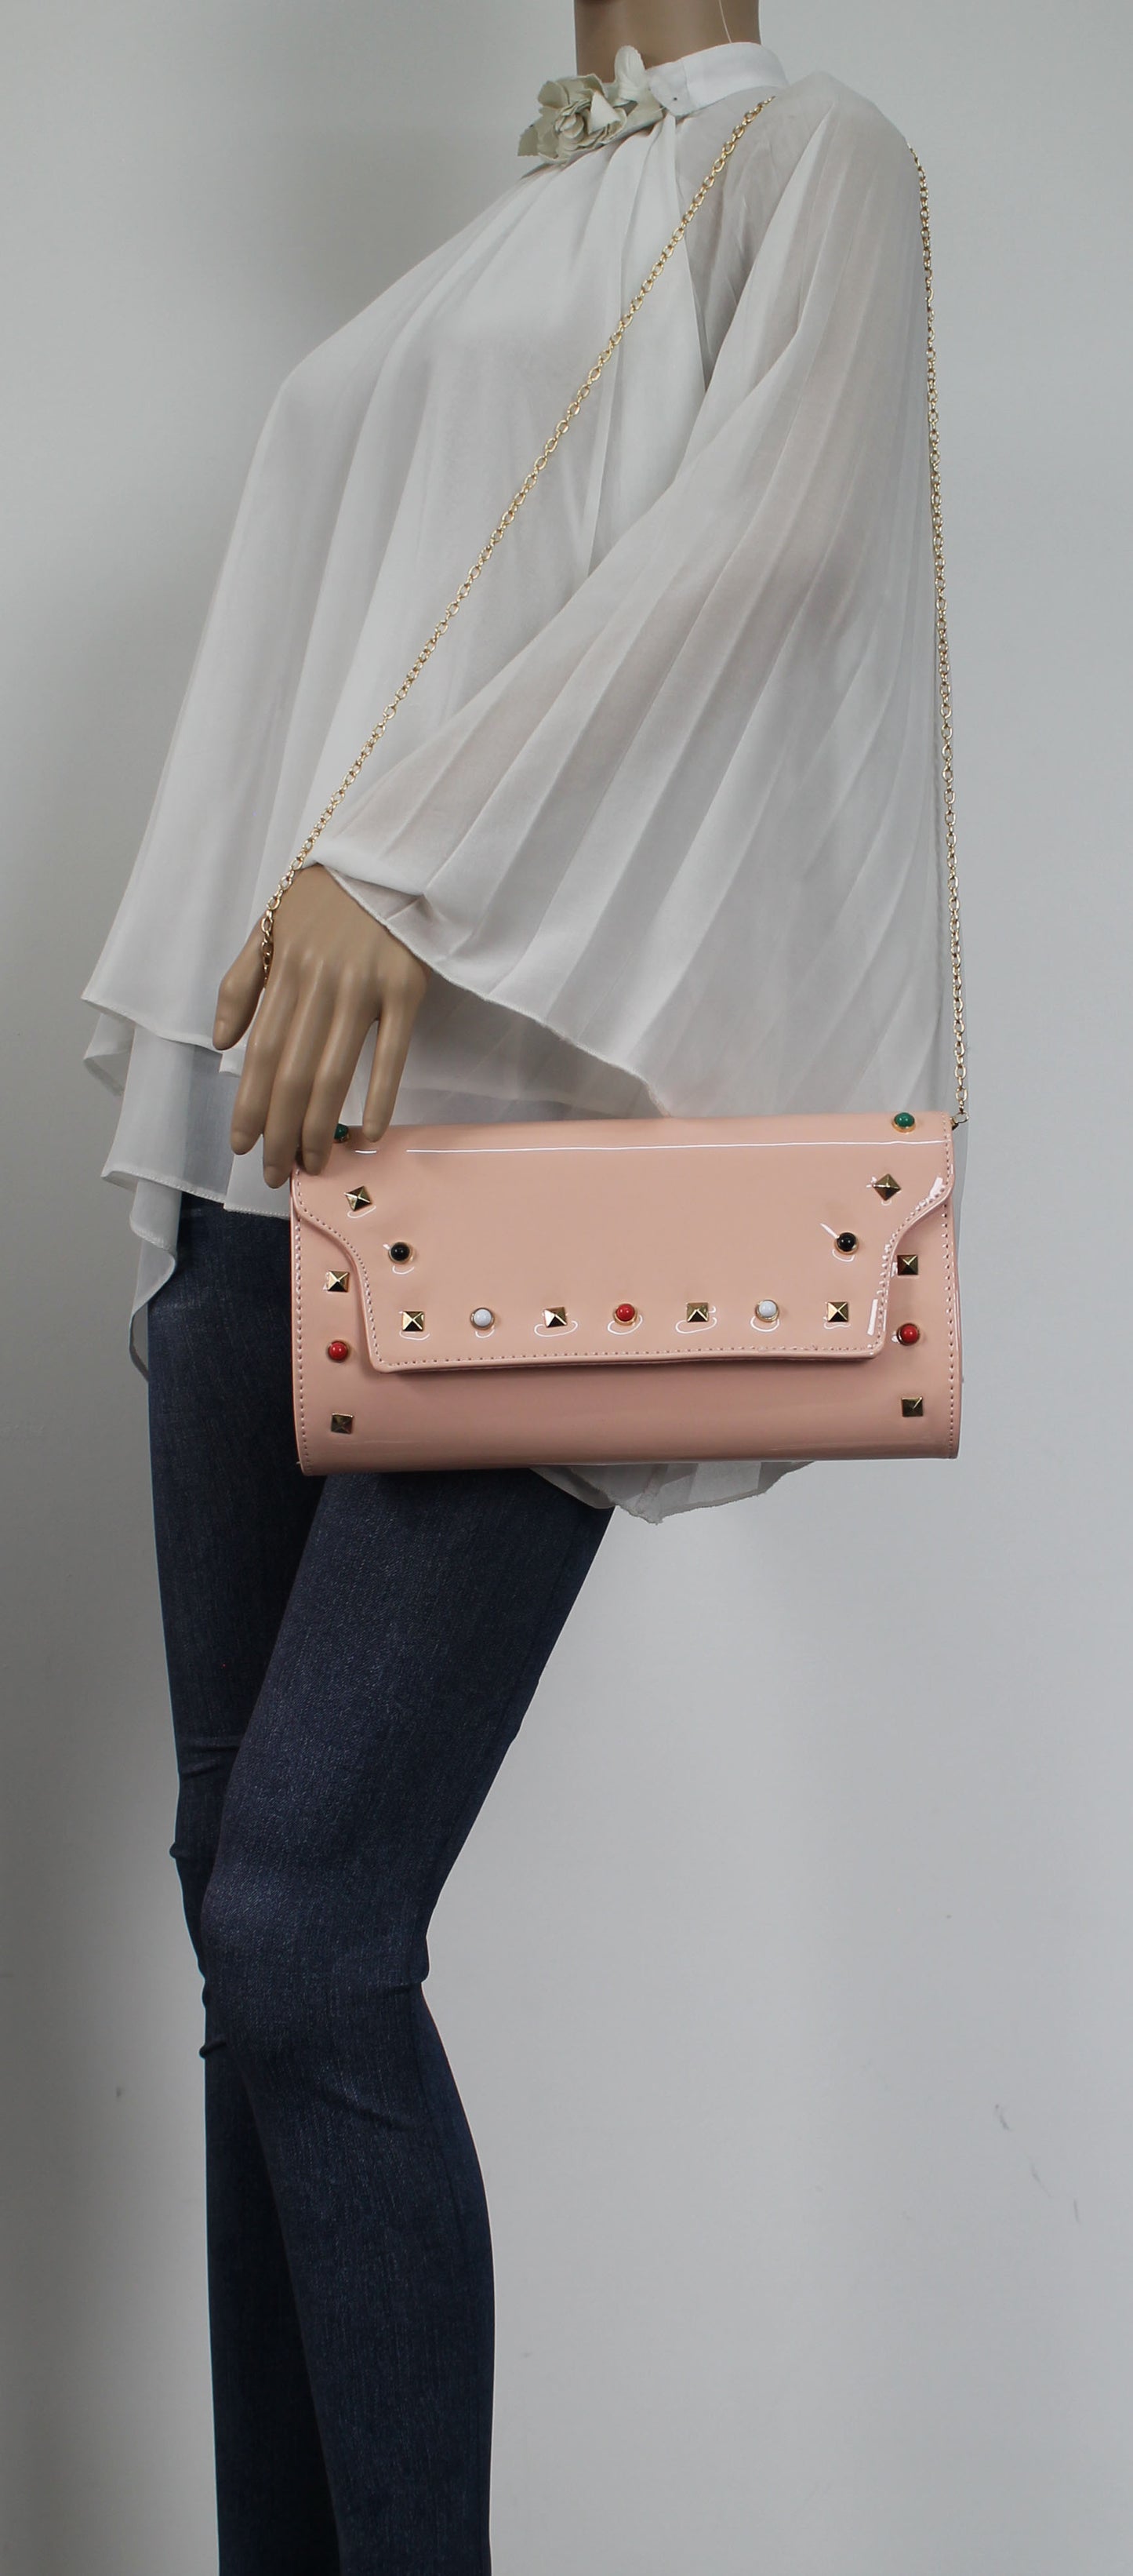 SWANKYSWANS Mya Patent Clutch Bag Pink Beige Cute Cheap Clutch Bag For Weddings School and Work